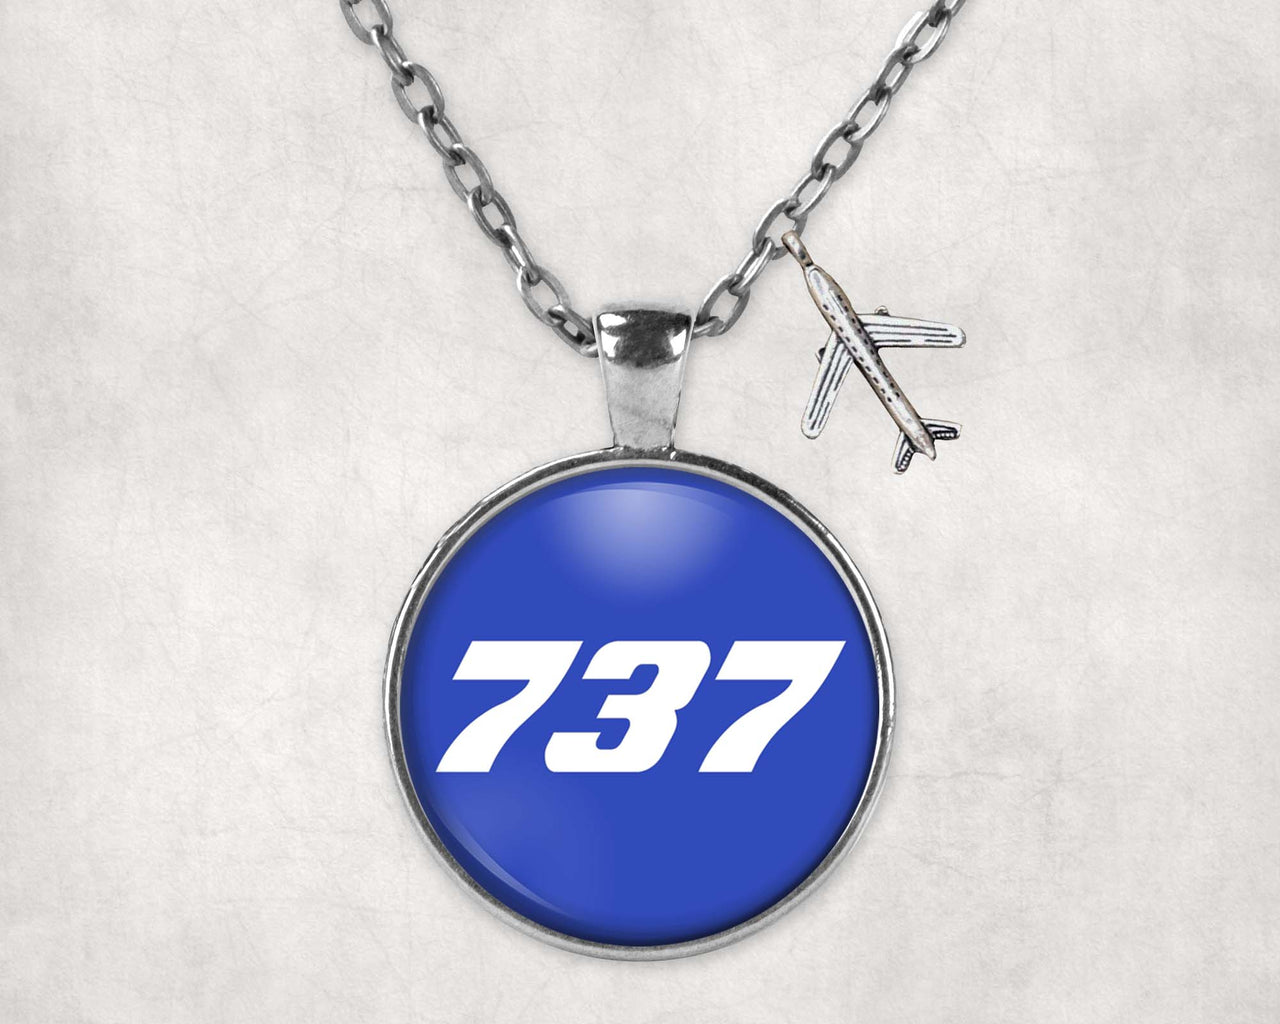 737 Flat Text Designed Necklaces